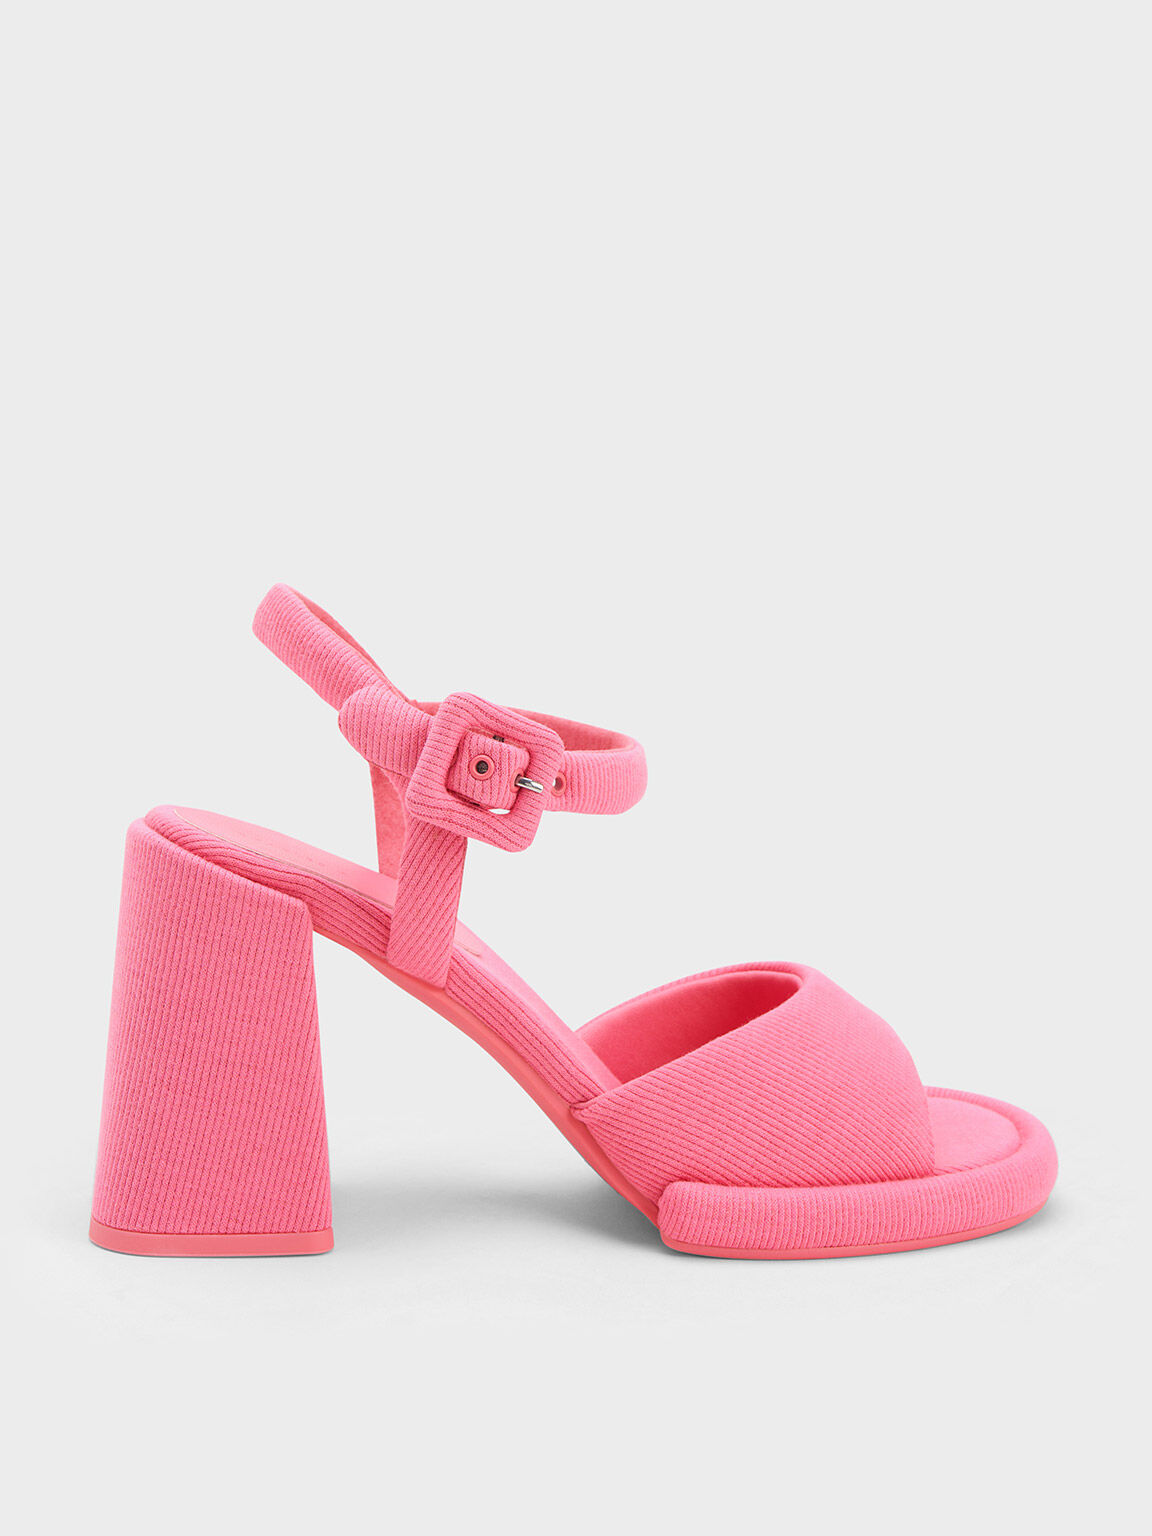 Women's Wedge Heel Light Pink Peep Toe Platform Espadrille Sandals Size 6-9